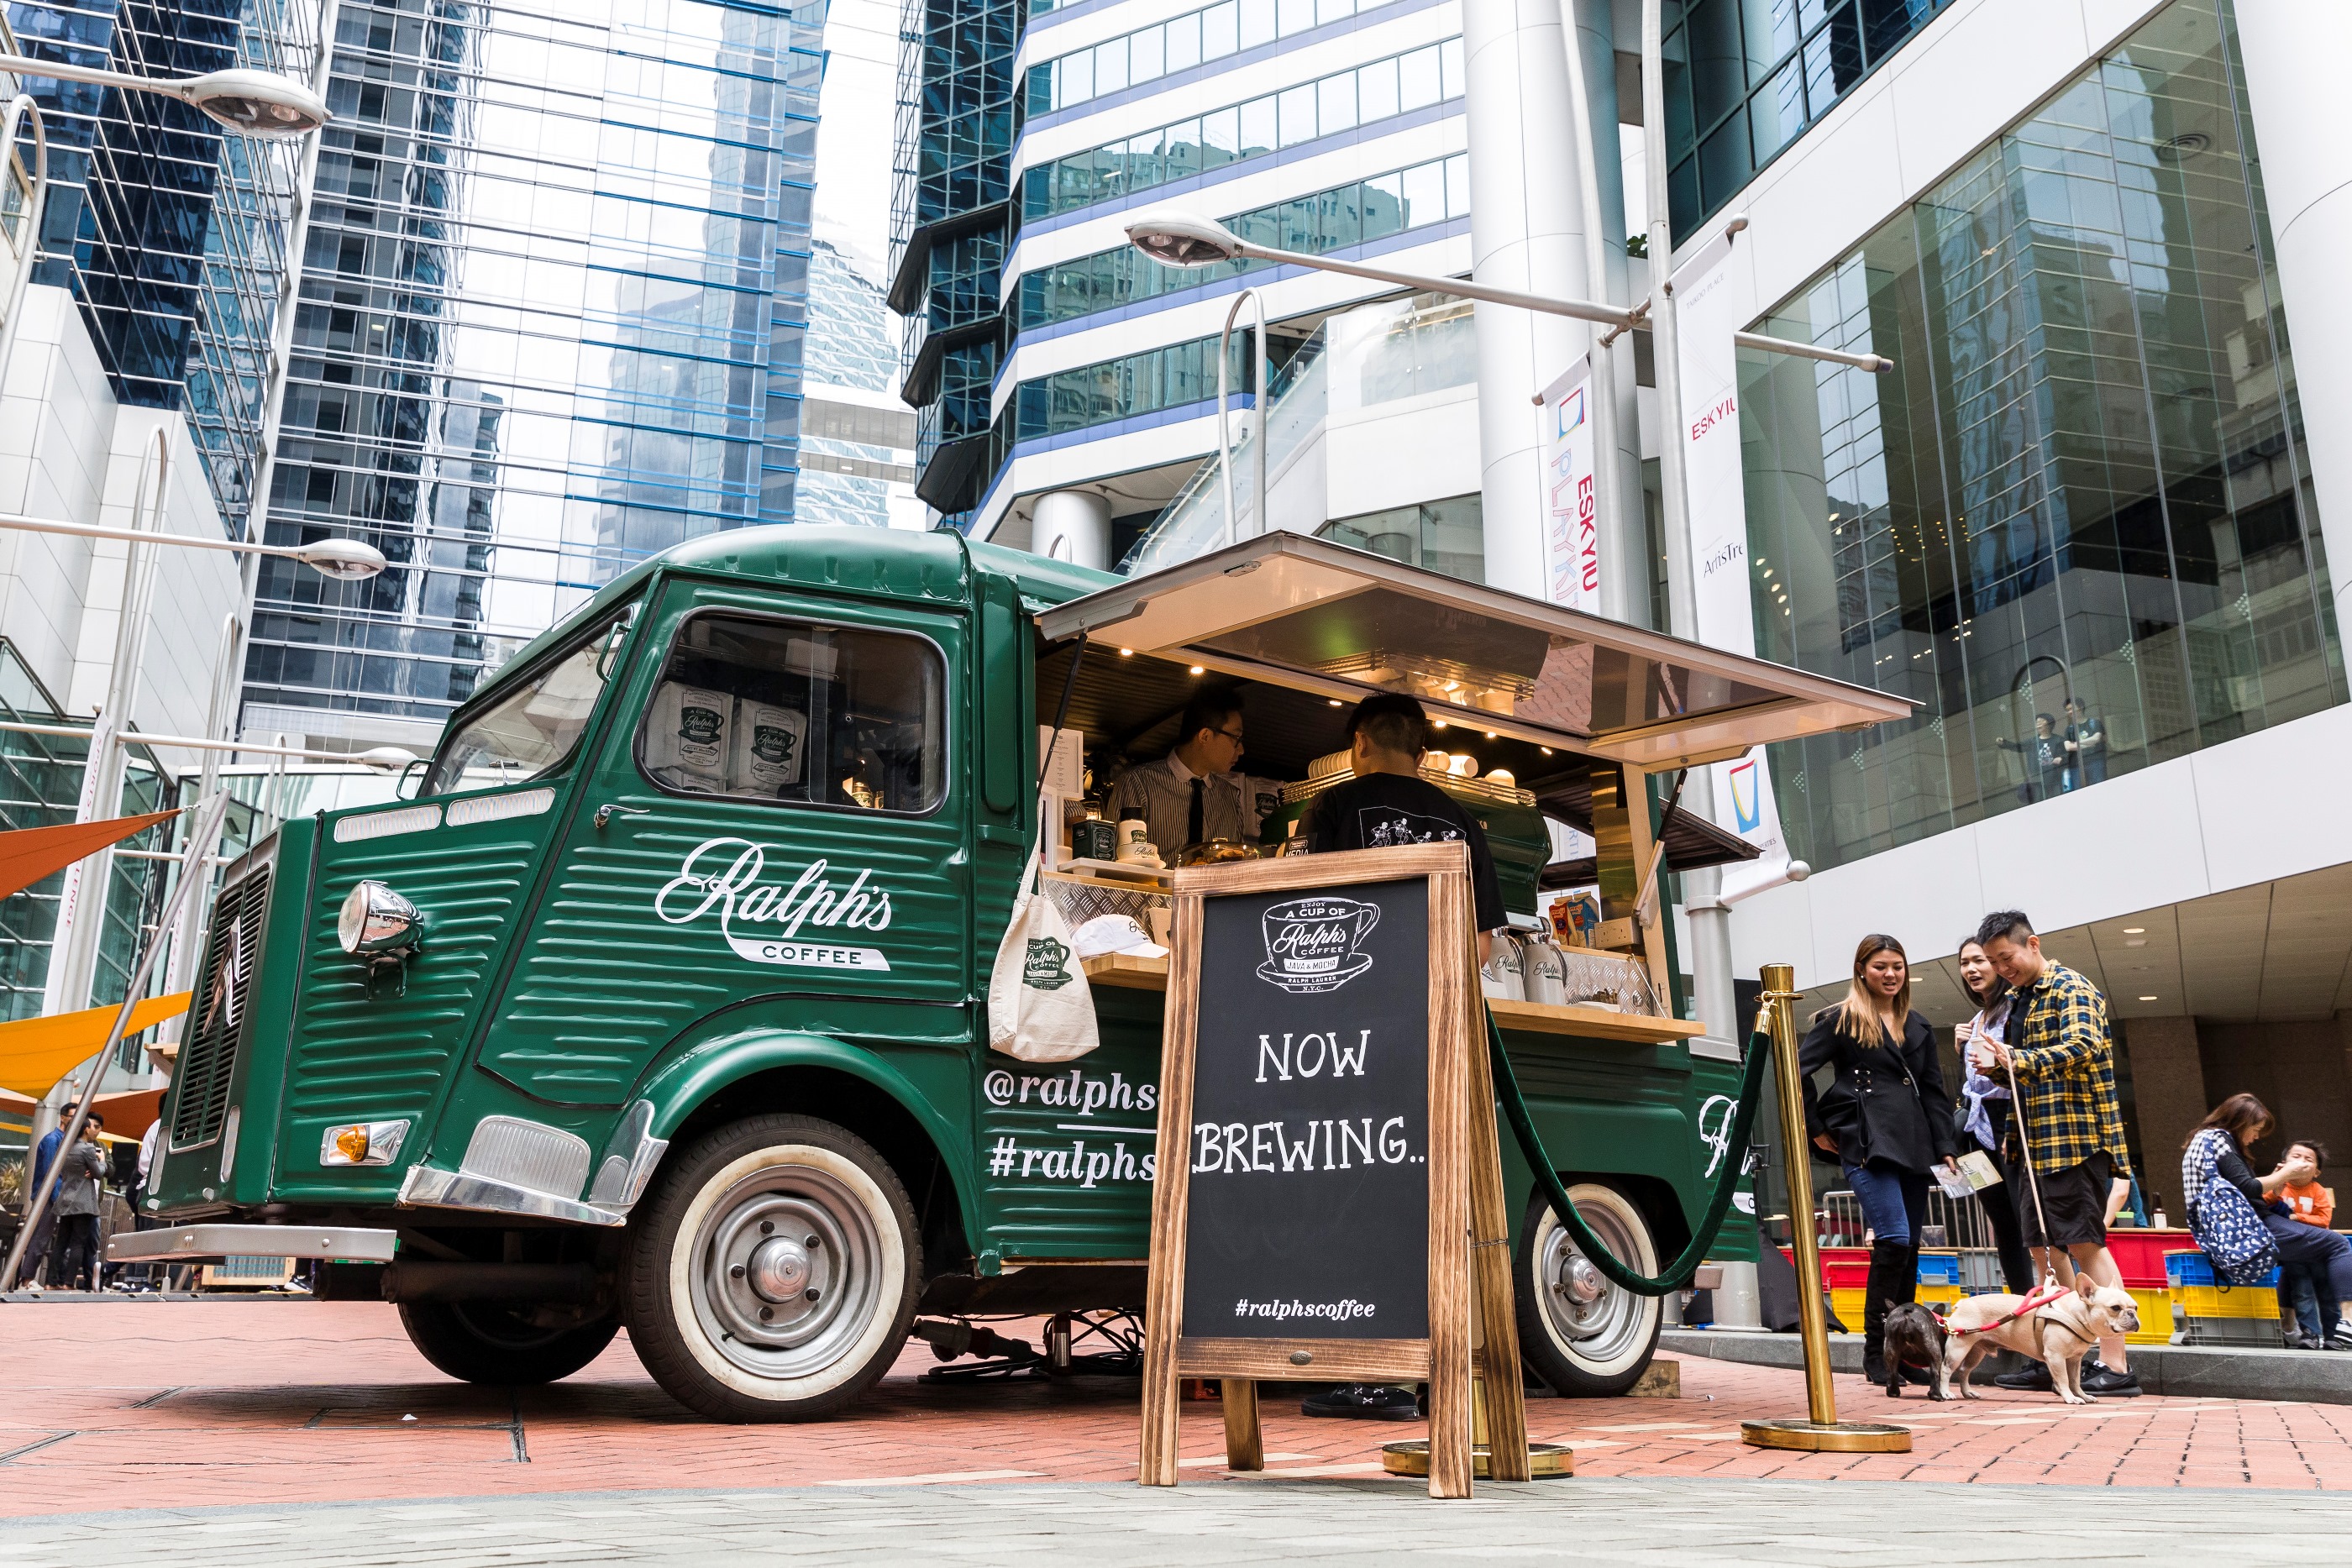 Ralph Lauren's coffee truck debuts in Hong Kong - Hashtag Legend